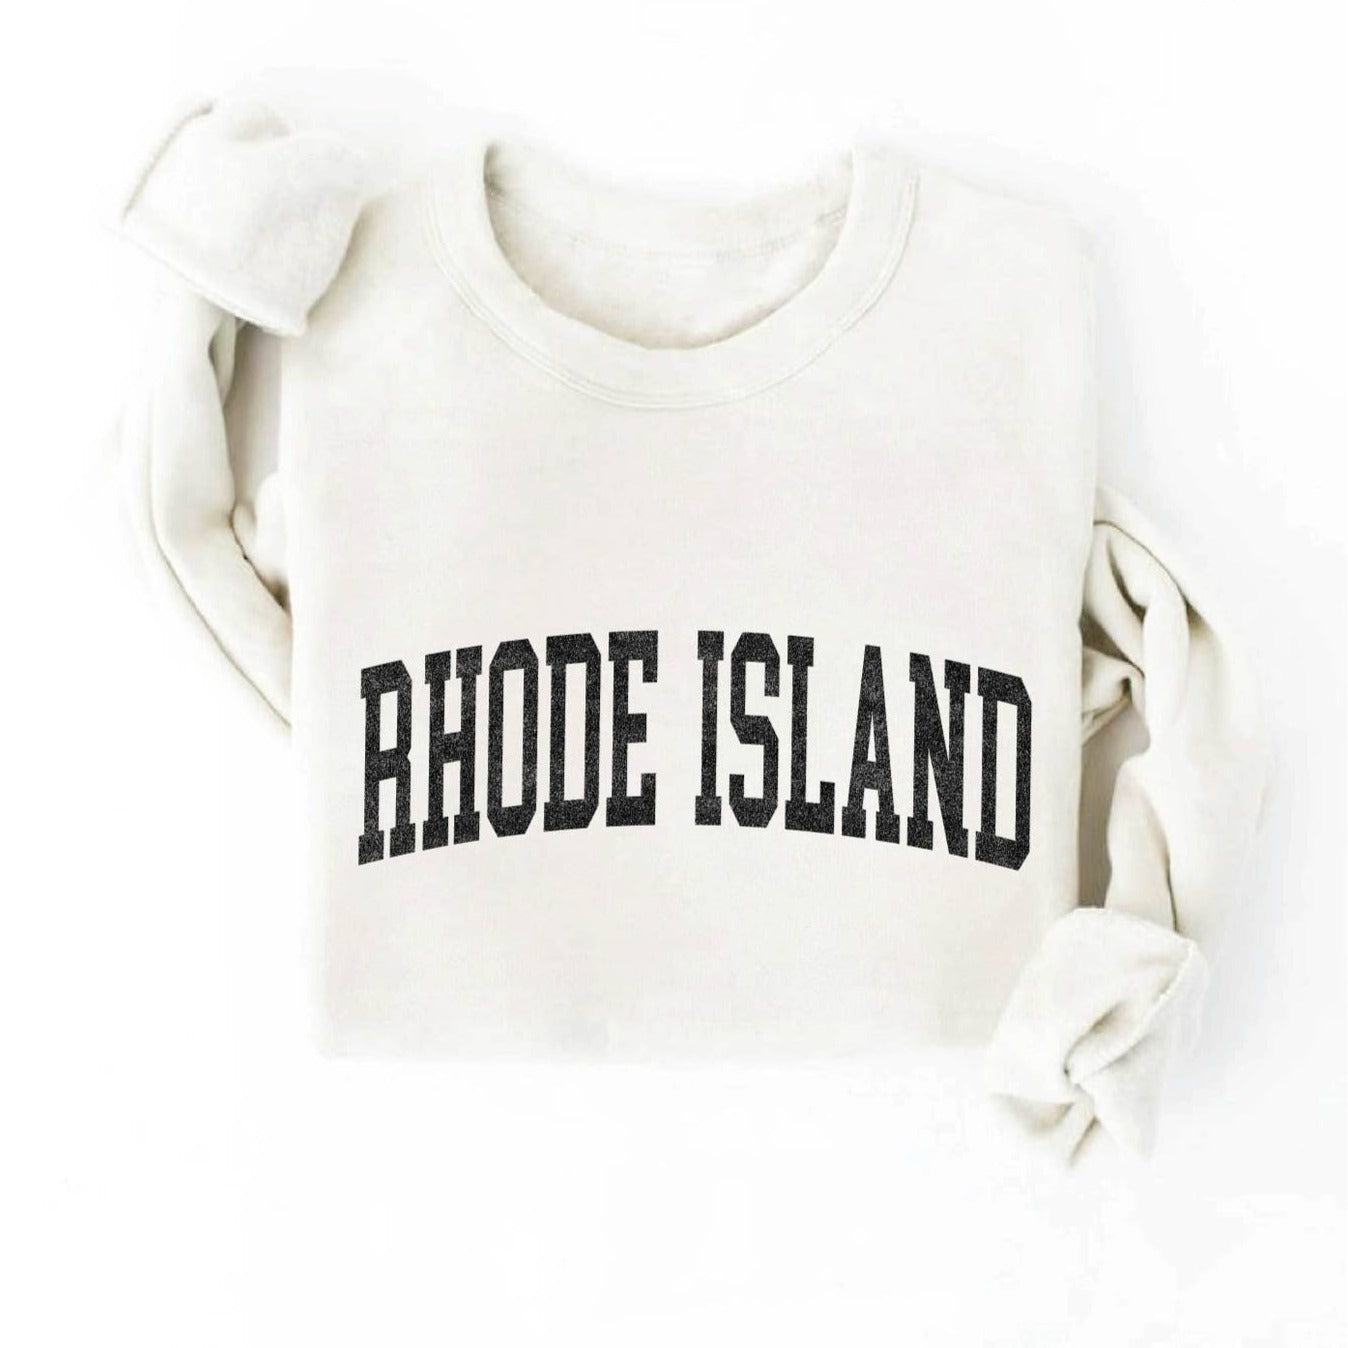 Rhode Island Graphic Sweatshirt